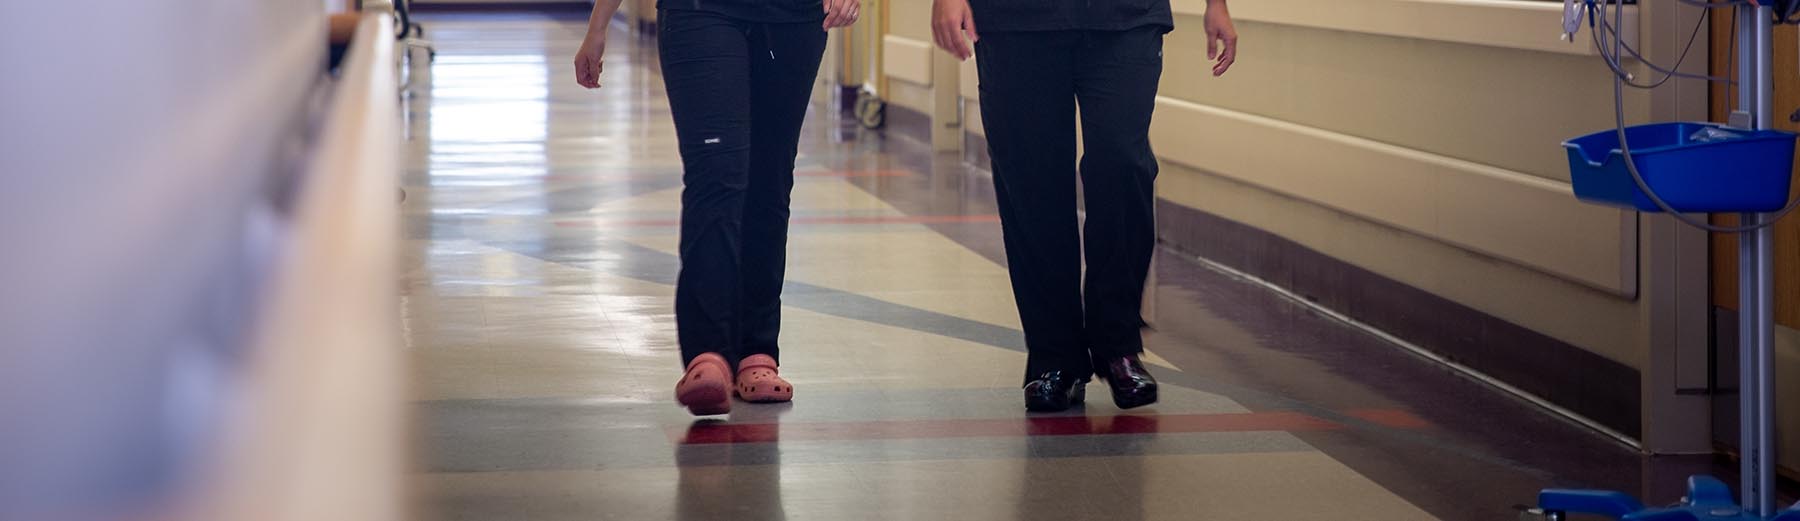 Two nurses walking down a hallway